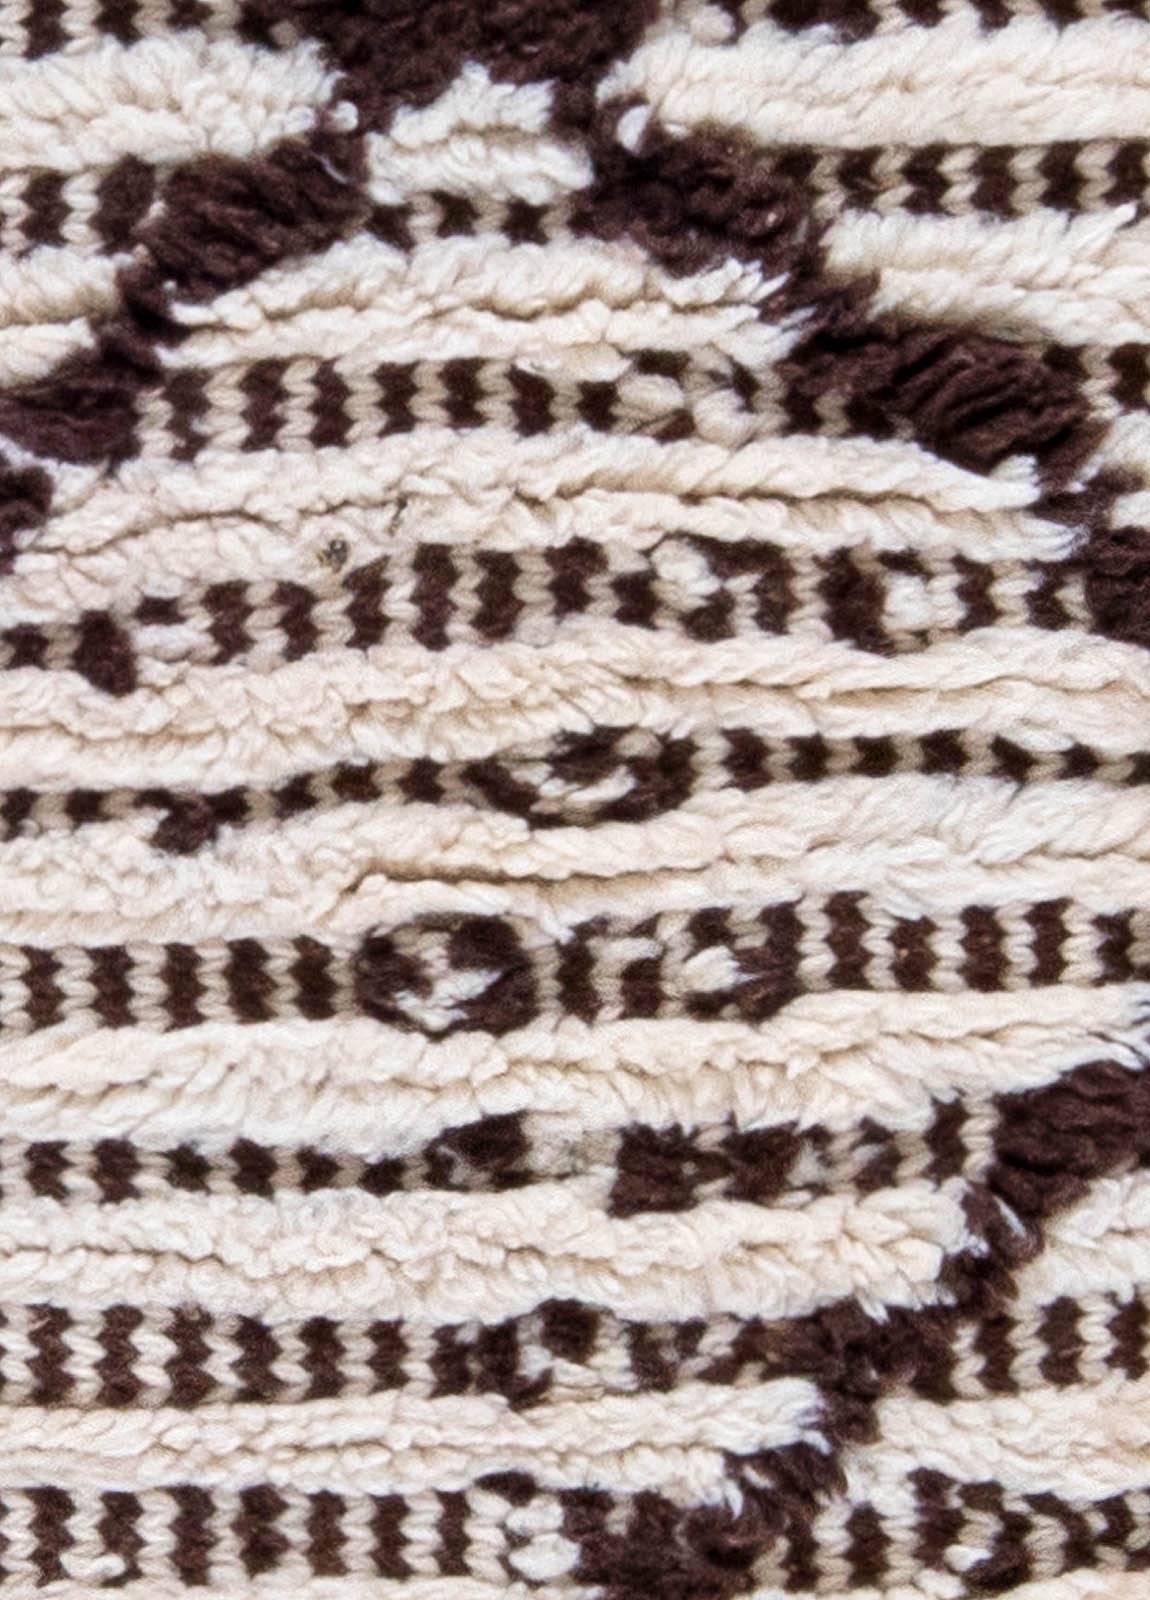 Vintage Moroccan rug.
Size: 3'6